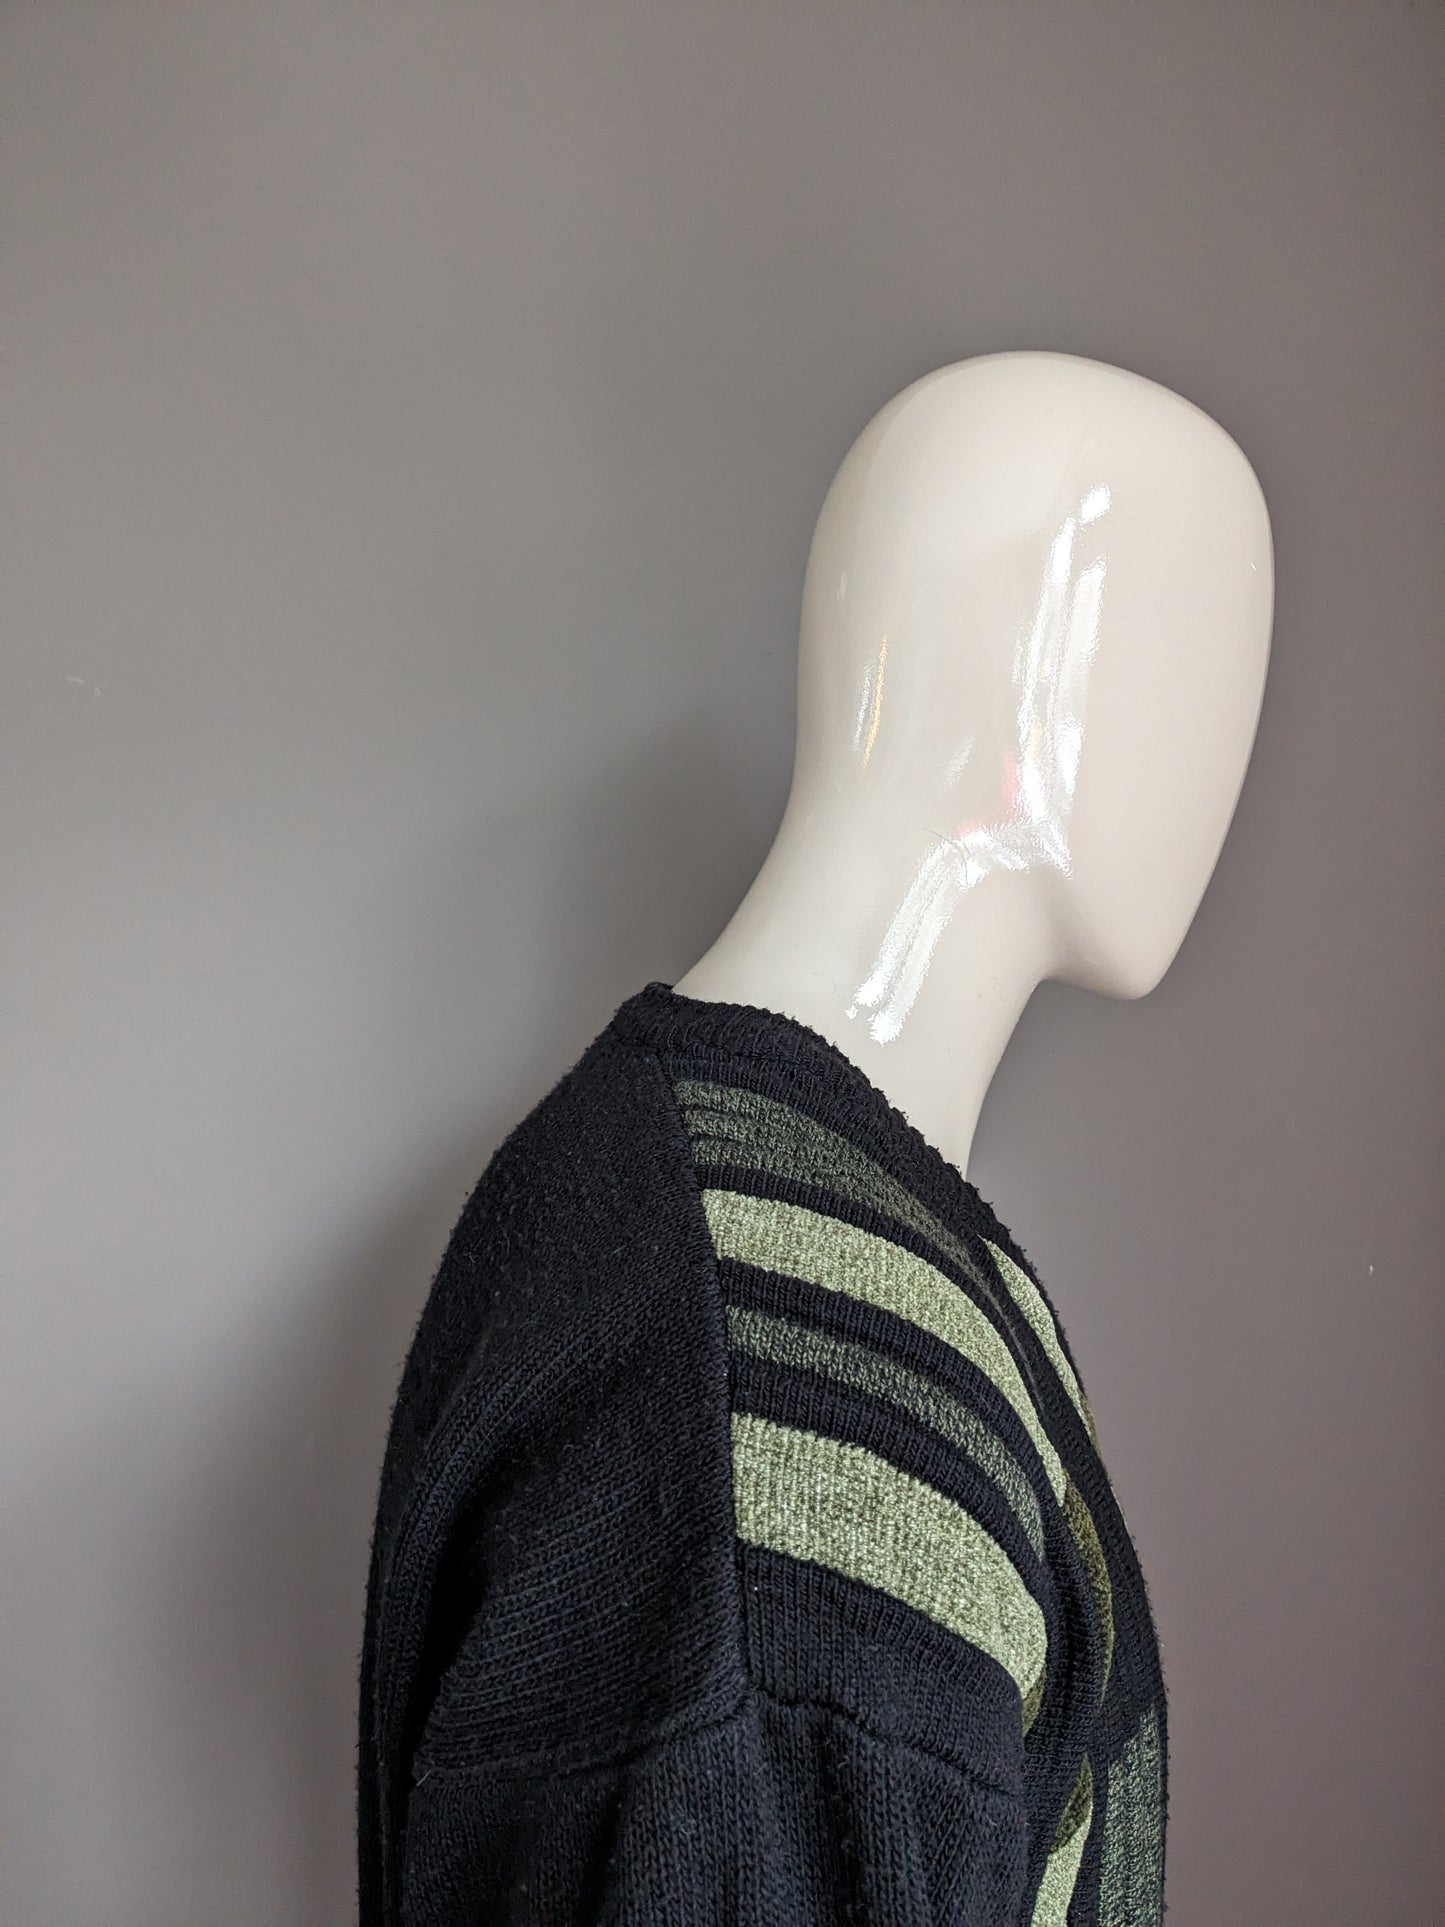 Vintage woolen sweater with v-neck. Black green colored. Size L.